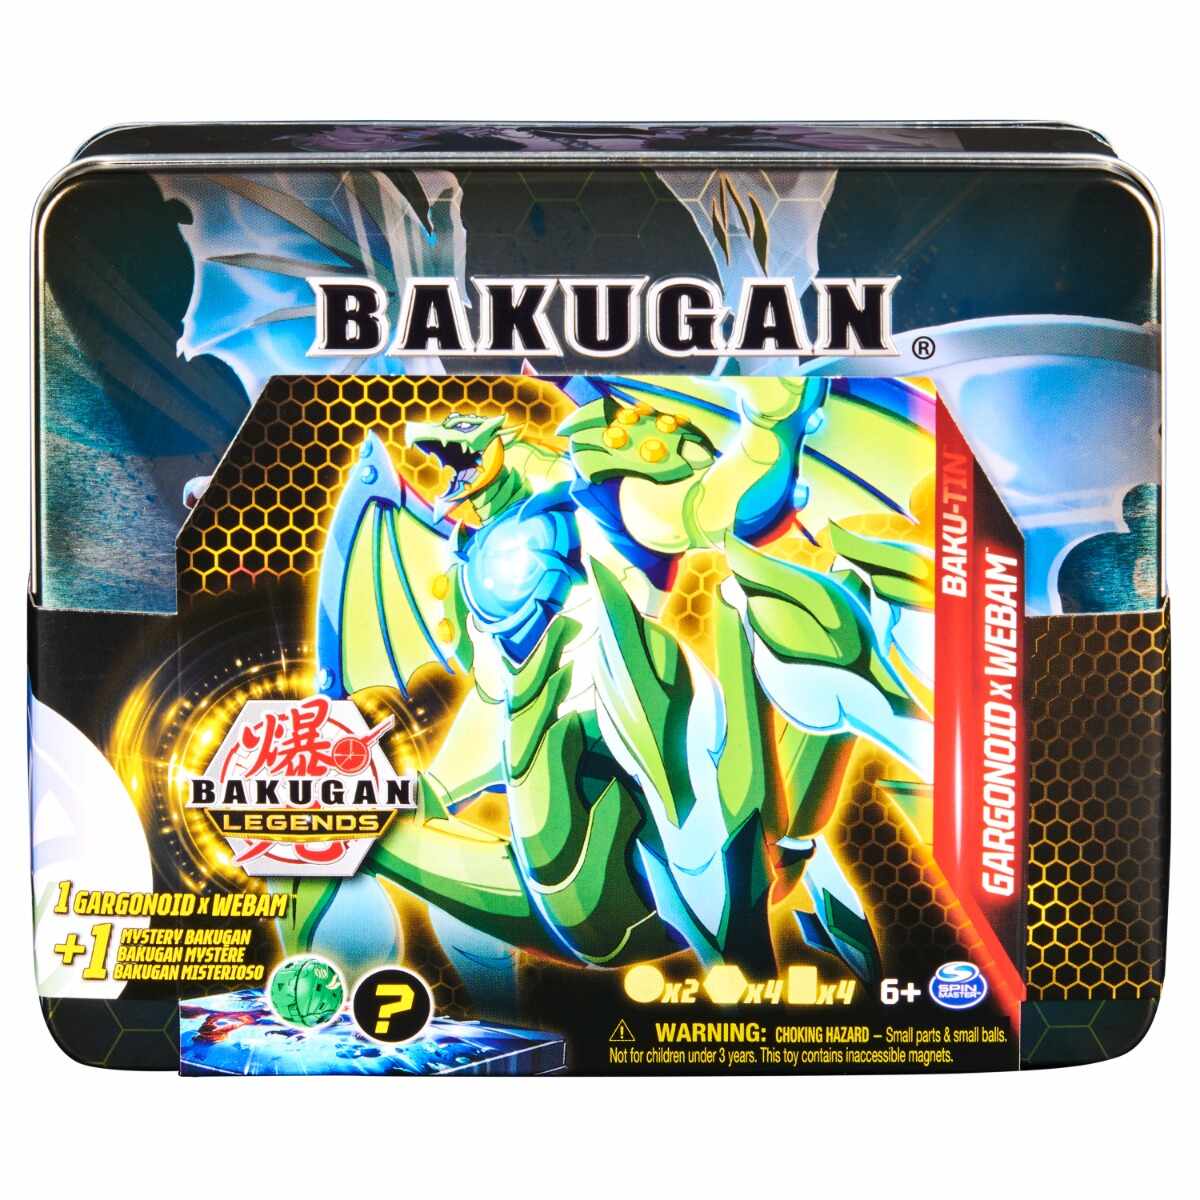 Set de joaca Bakugan Legends, cu un Bakugan surpriza in cutie de metal, S5, 20140555